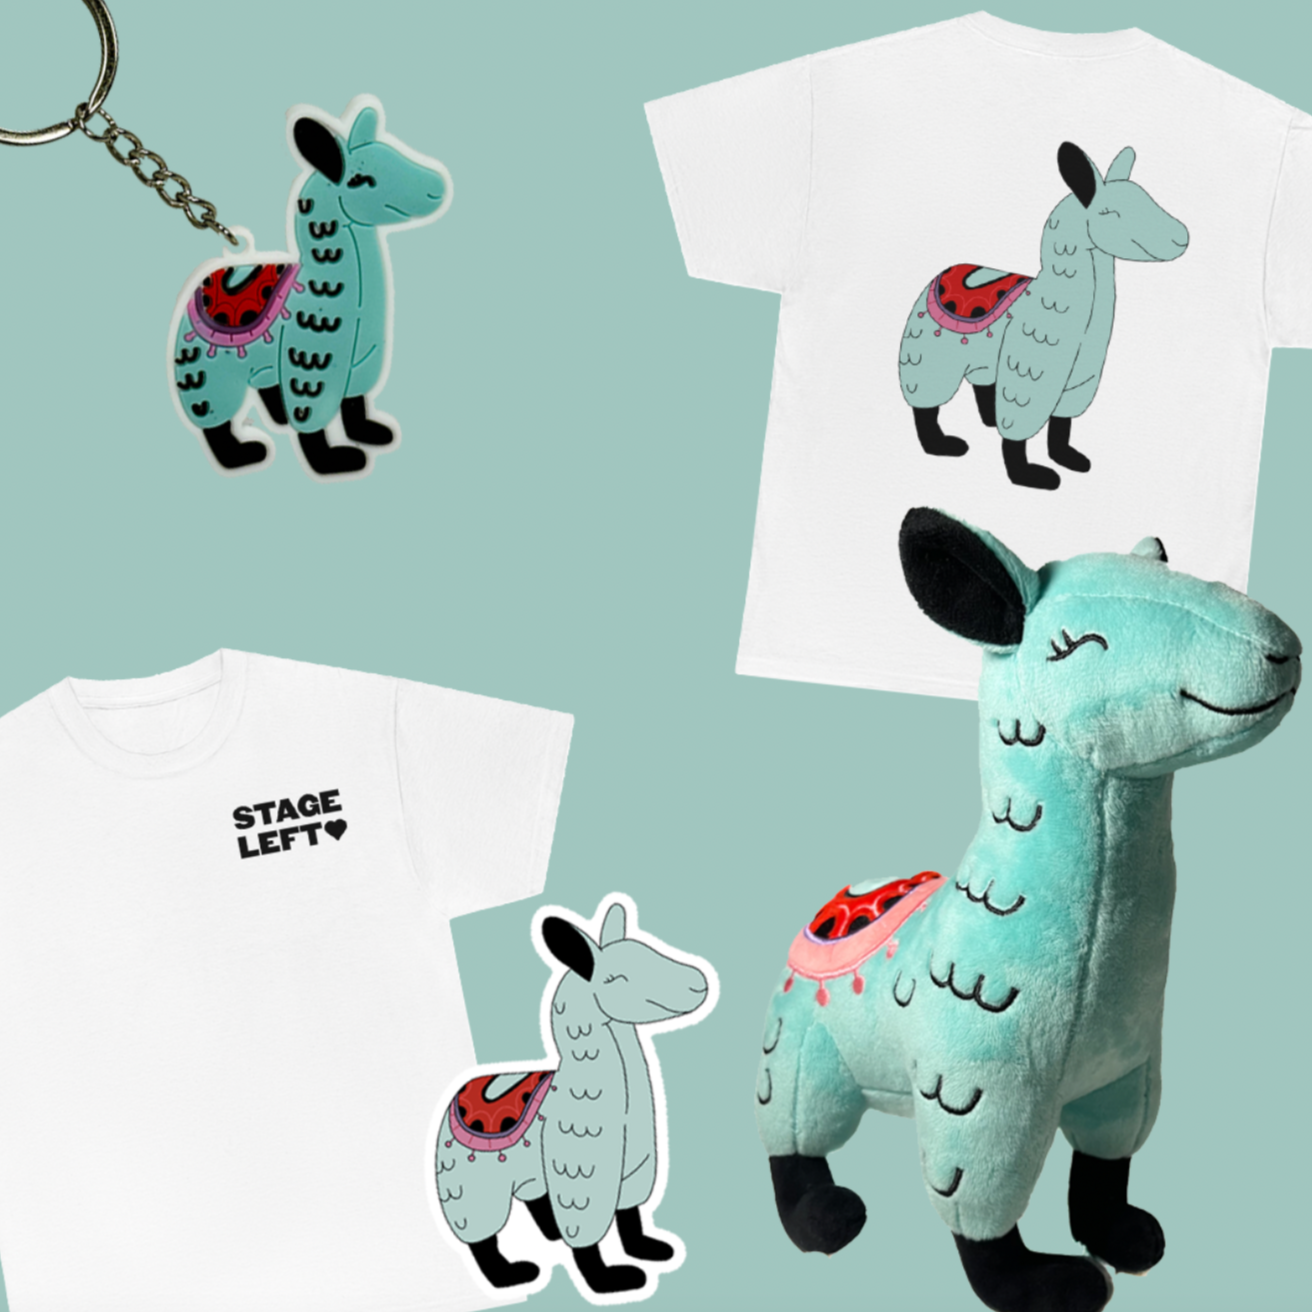 Doris Set: Tee, Stuffed Animal, Key Chain & Sticker